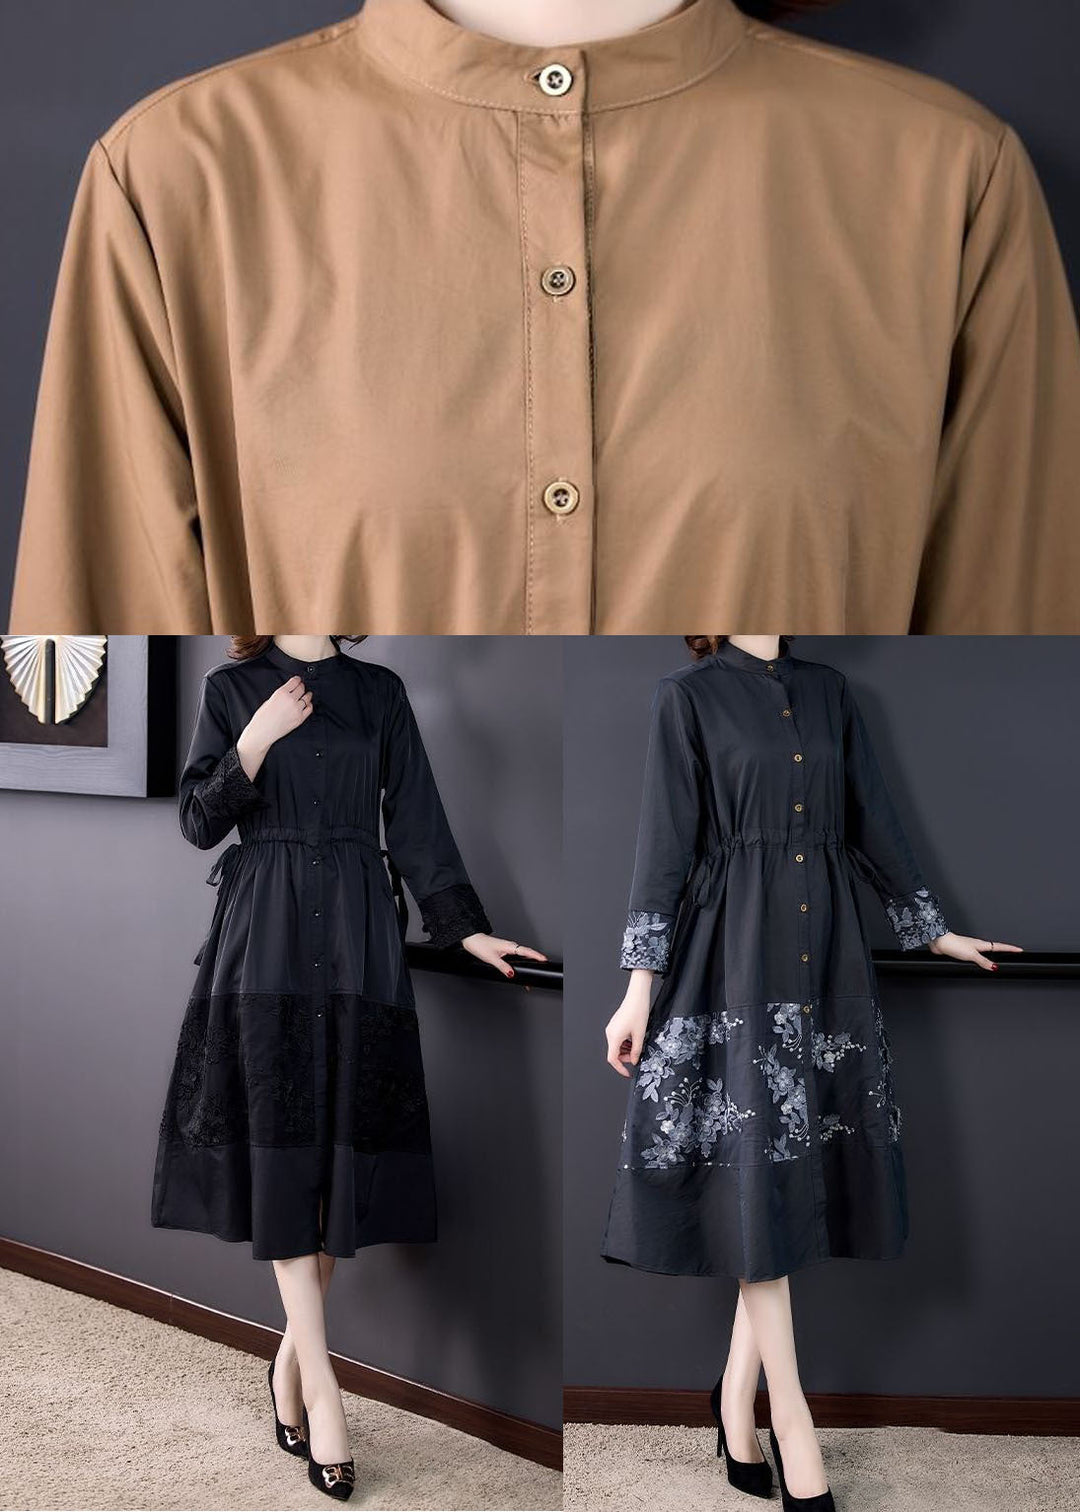 Khaki Patchwork Cotton Coats Stand Collar Drawstring Long Sleeve